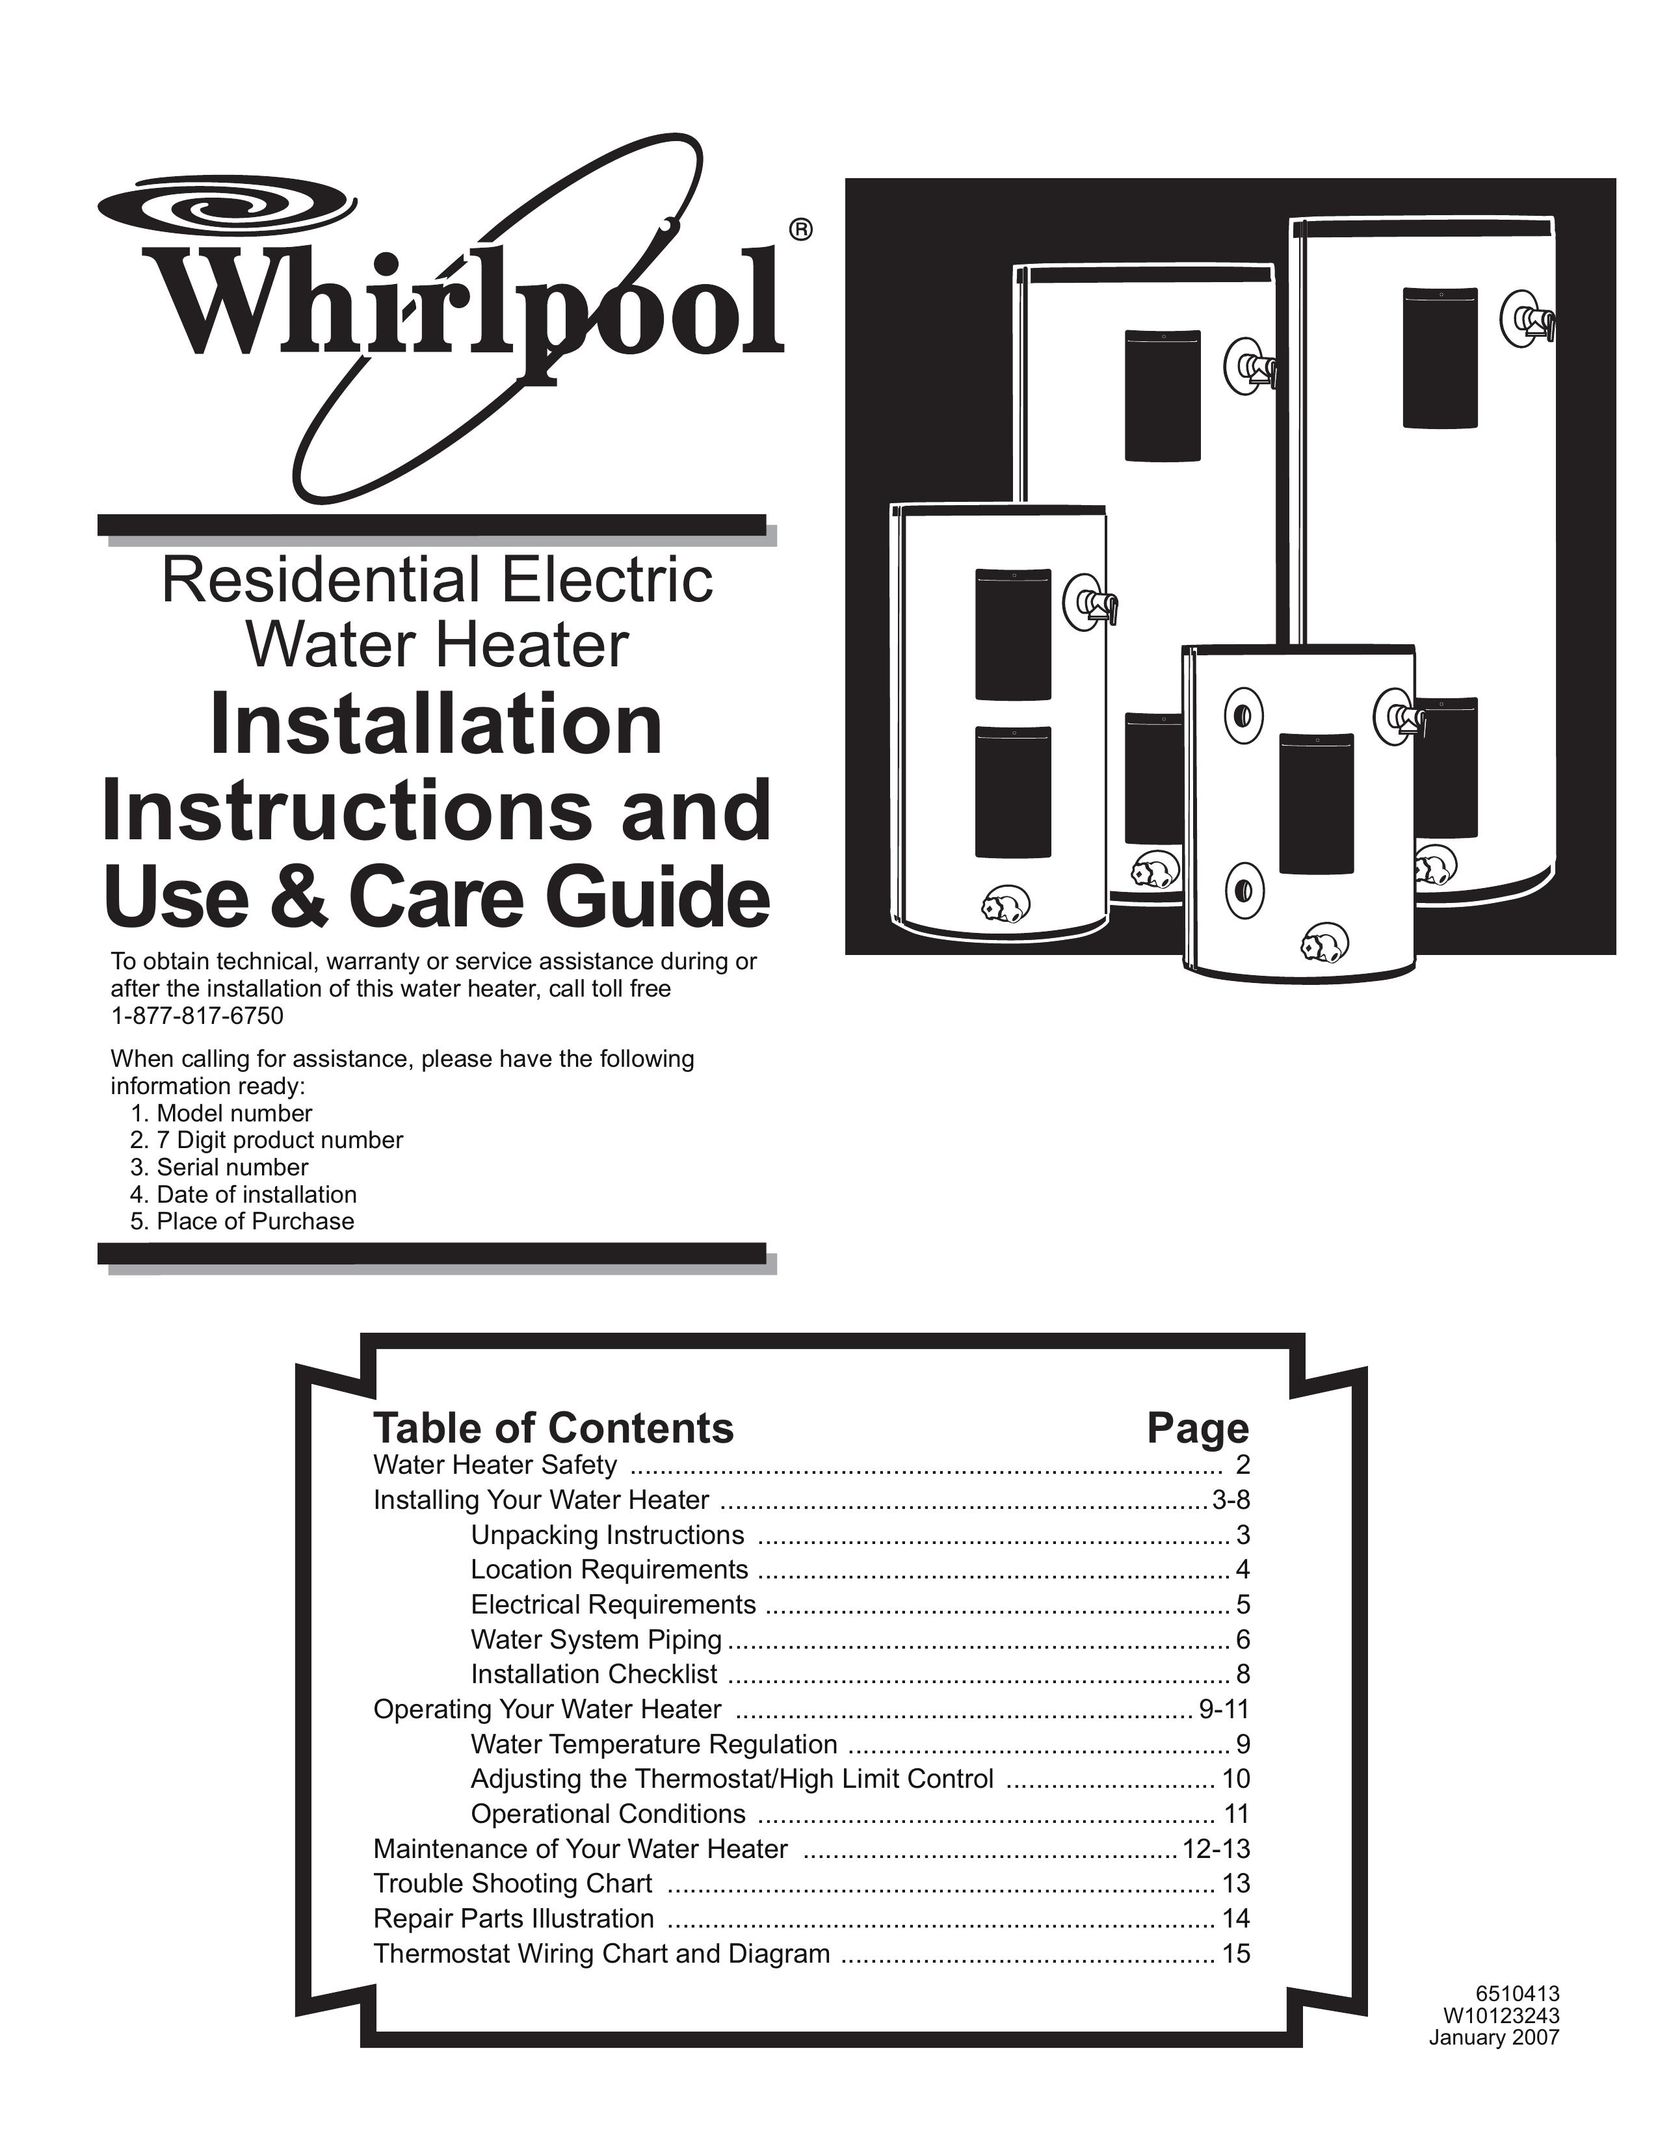 Whirlpool 140422 Water Heater User Manual